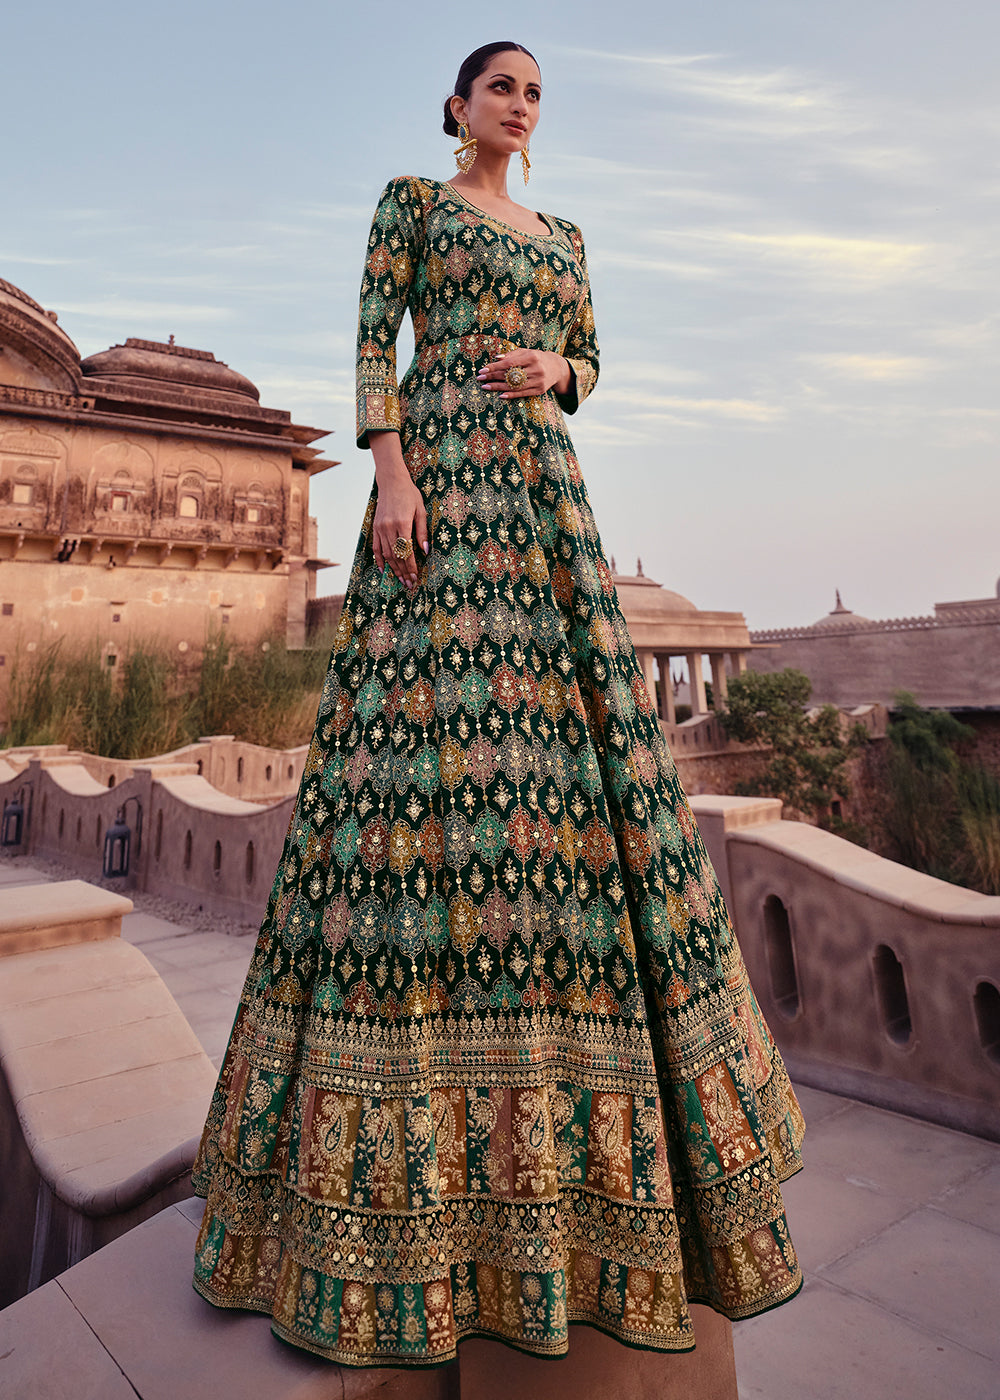 Buy Now Dark Green Heavy Georgette Floor Length Anarkali Gown Online in USA, UK, Australia, Canada & Worldwide at Empress Clothing. 